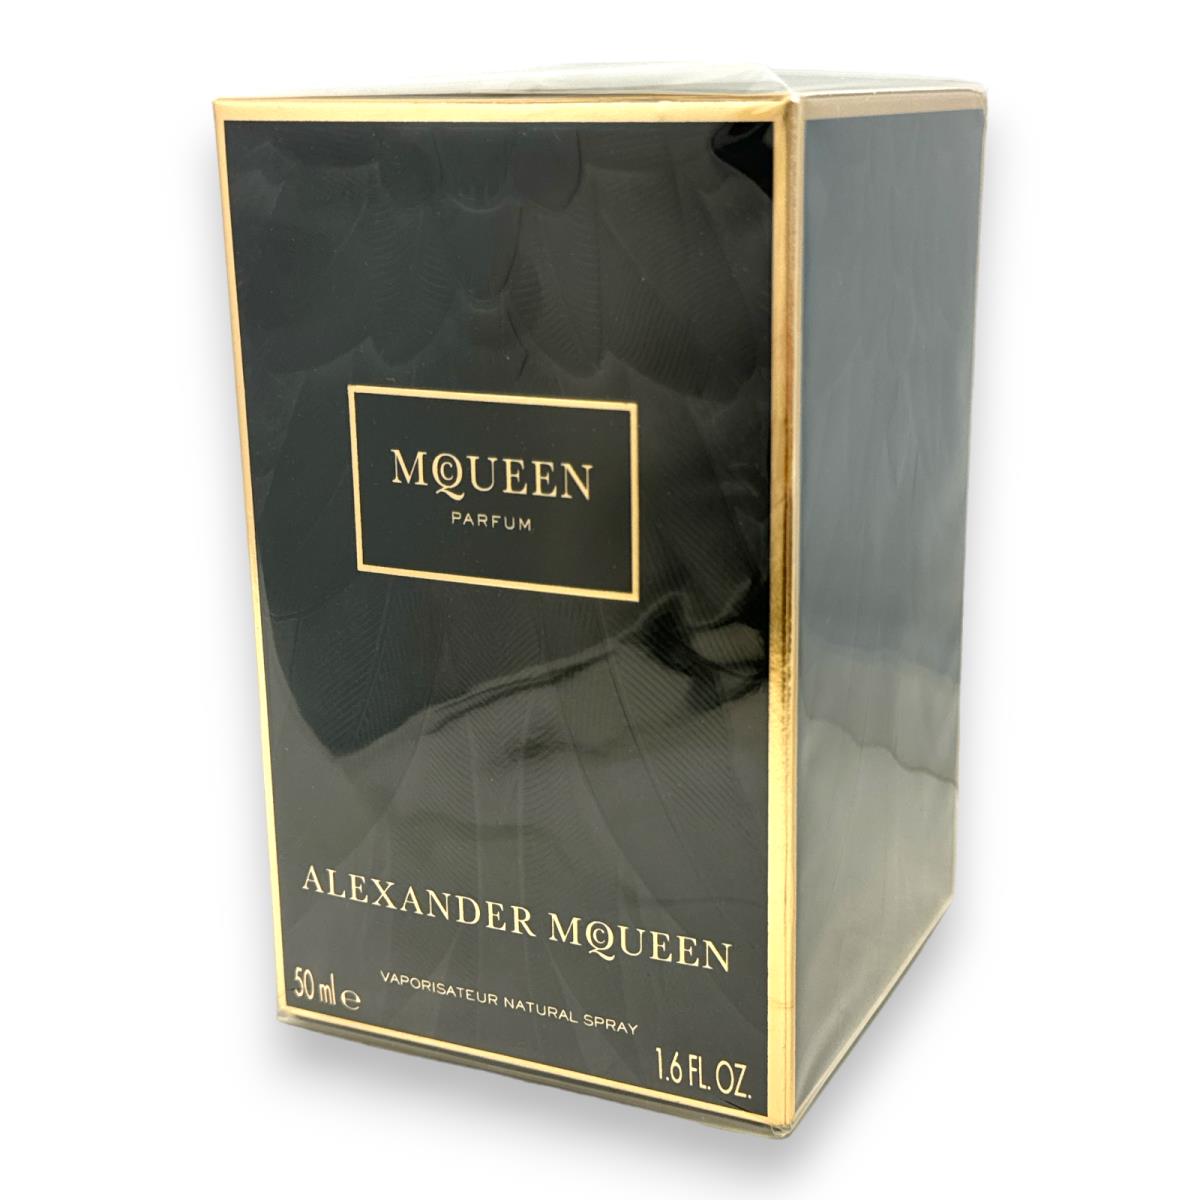 Mcqueen Parfum By Alexander Mcqueen Eau De Parfum Spray 50ml/1.6fl.oz